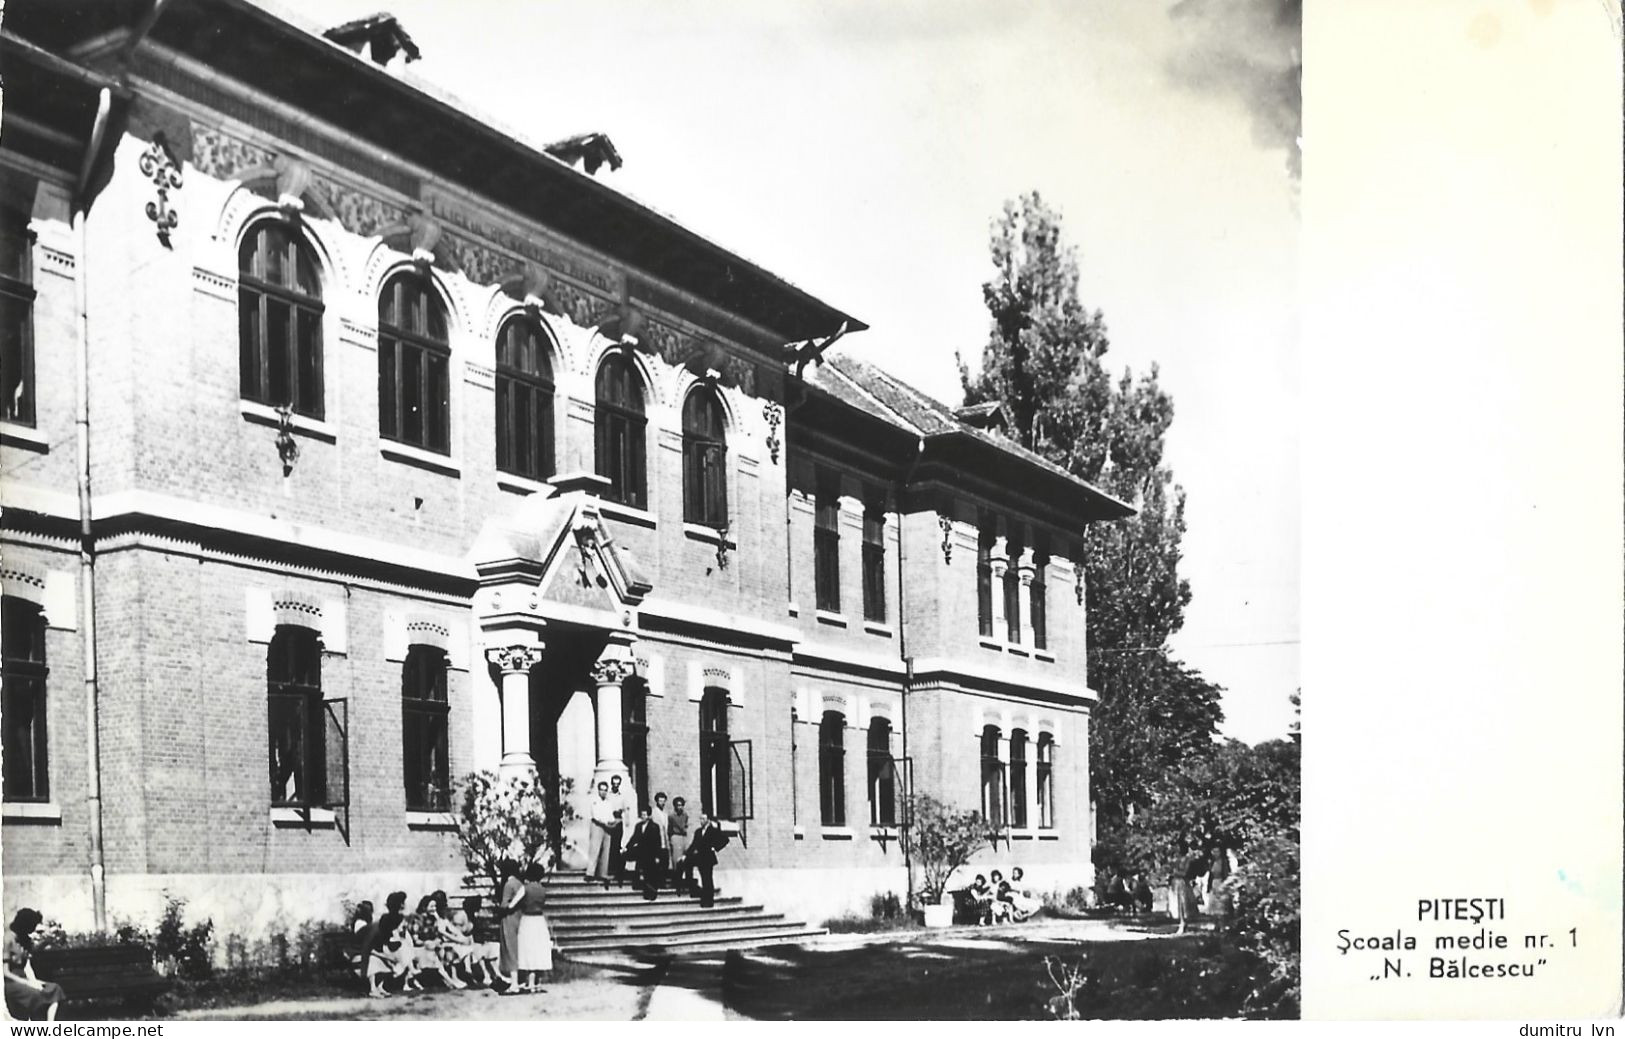 ROMANIA PITESTI - SECONDARY SCHOOL NO. 1 ''N. BALCESCU'', BUILDING, ARCHITECTURE, PEOPLE ON THE BENCH - Port Dû (Taxe)